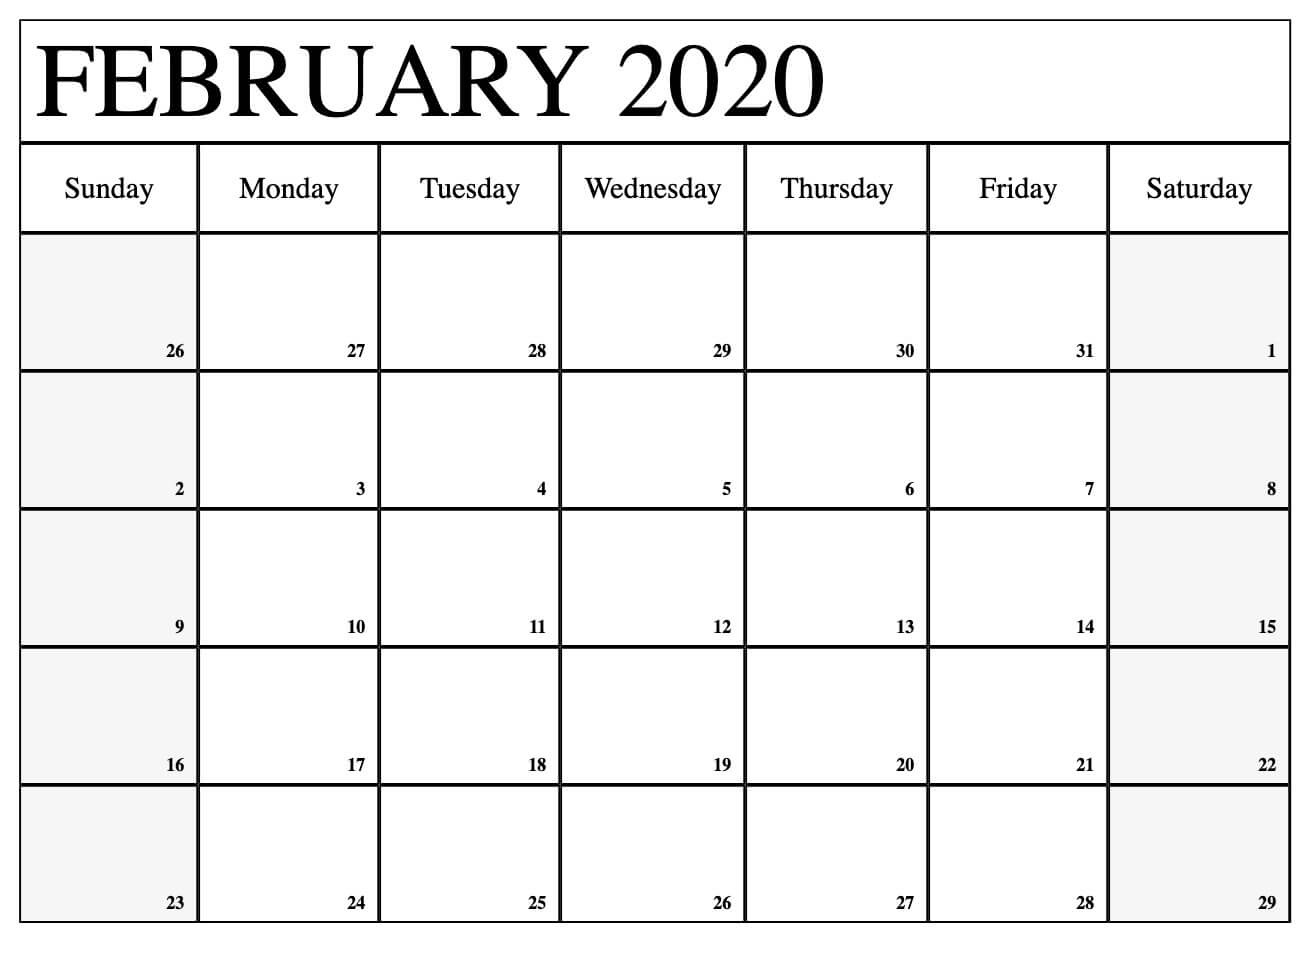 Blank Calendar Template